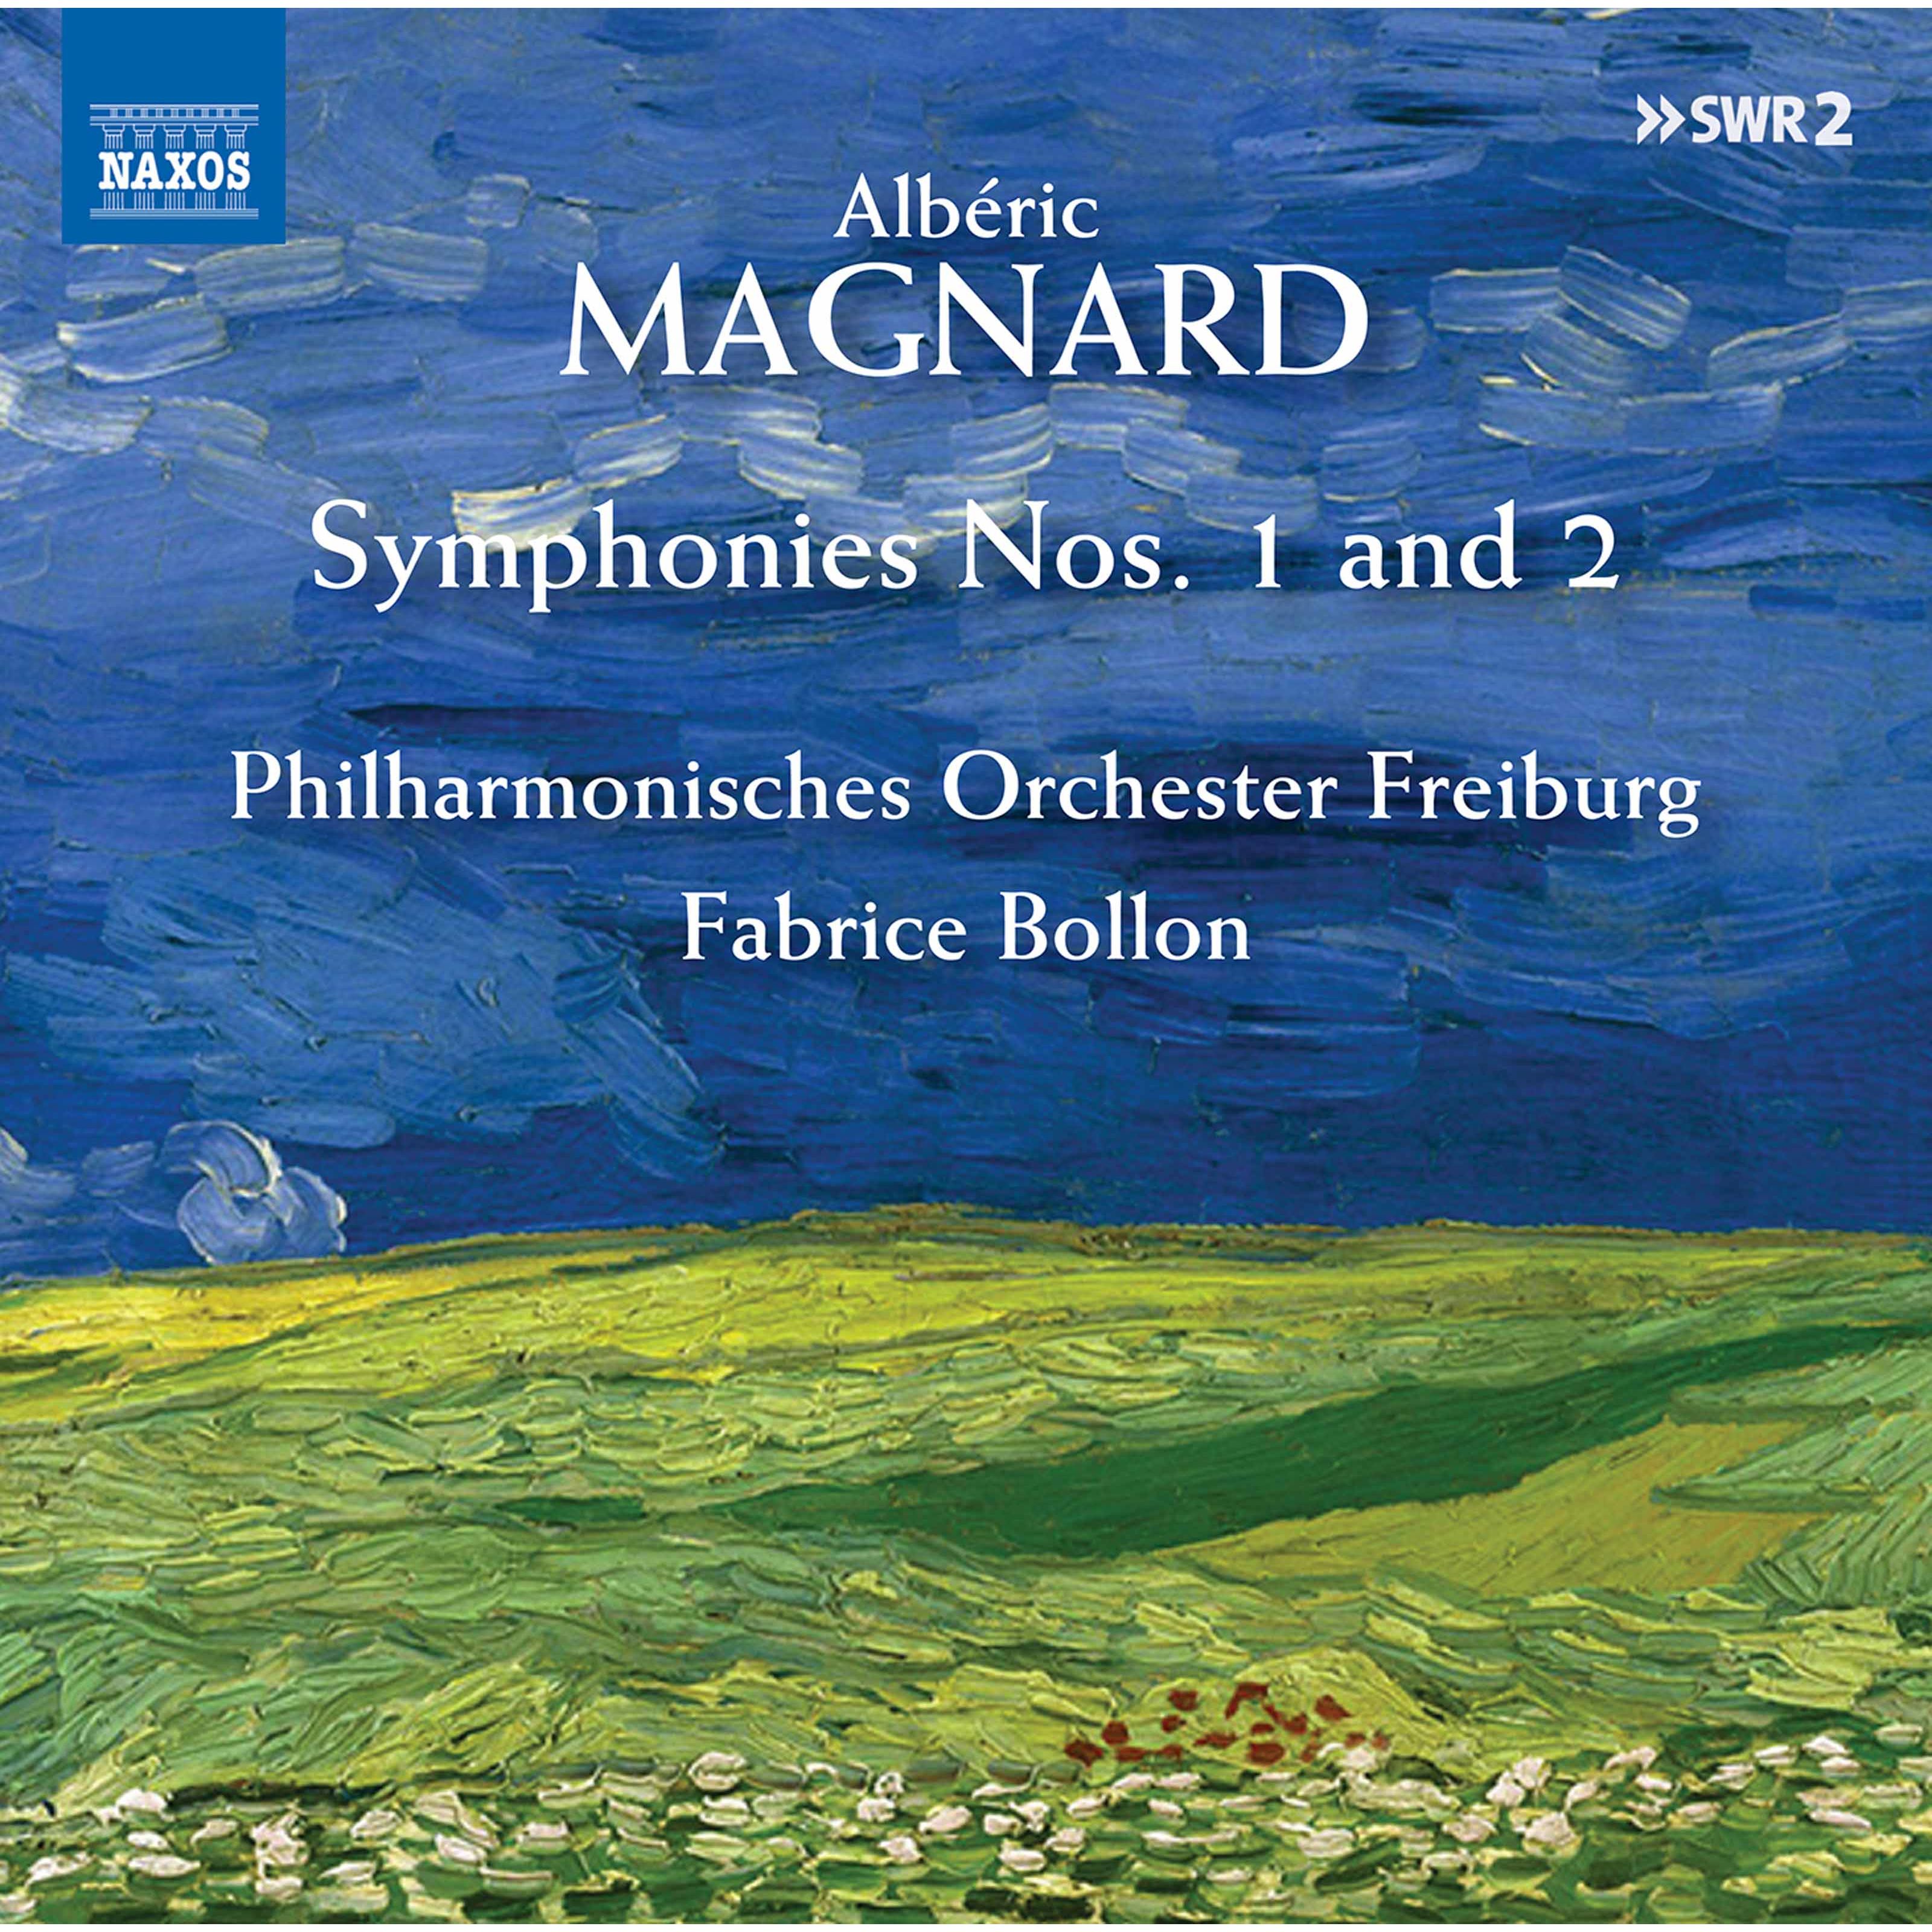 Philharmonisches Orchester Freiburg & Fabrice Bollon - Magnard: Symphonies Nos. 1 and 2 (2020) [FLAC 24bit/48kHz]